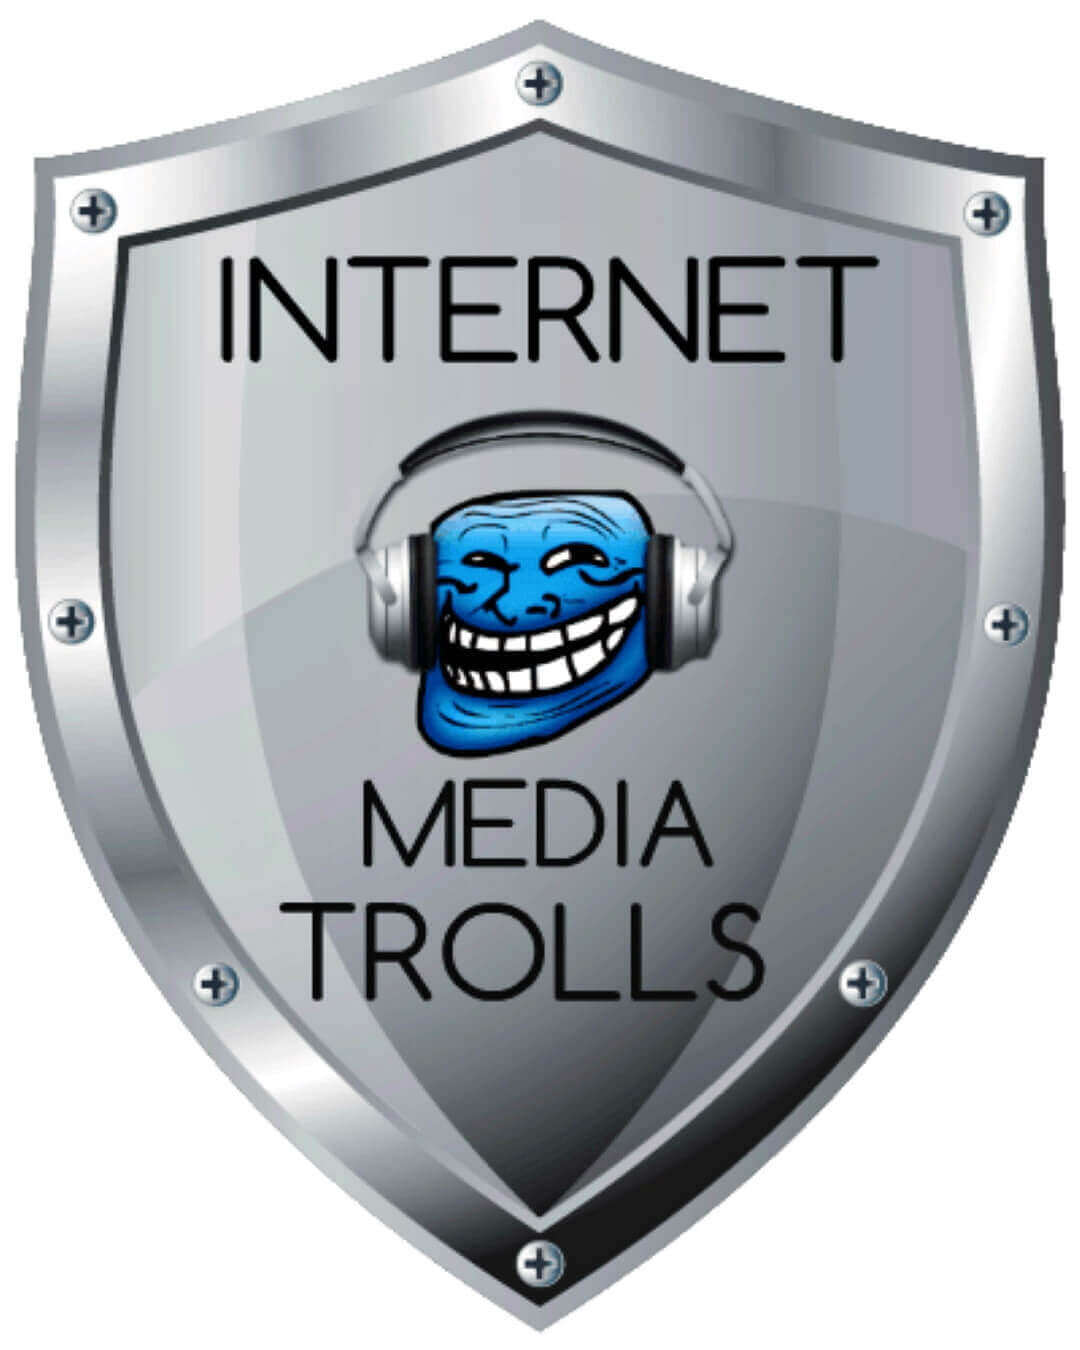 michael-nuccitelli-internet-troll-image-11